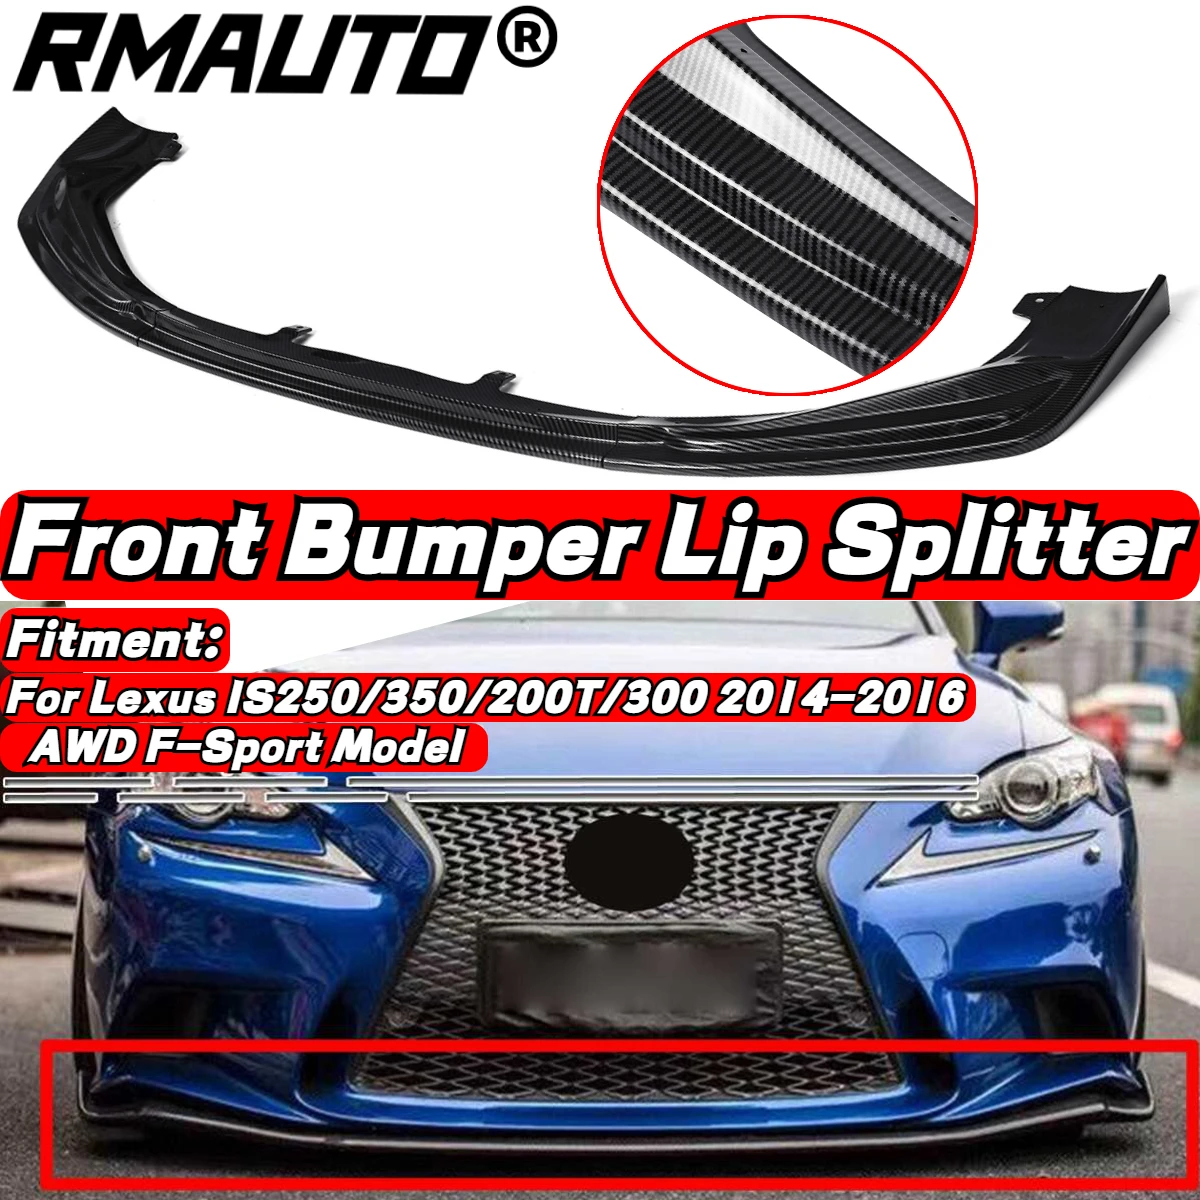 RMAUTO Carbon Fiber Front Bumper Lip Splitter Diffuser Spoiler Chin Body Kit For Lexus IS250 IS350 IS200T F-Sport 2014 2015 2016